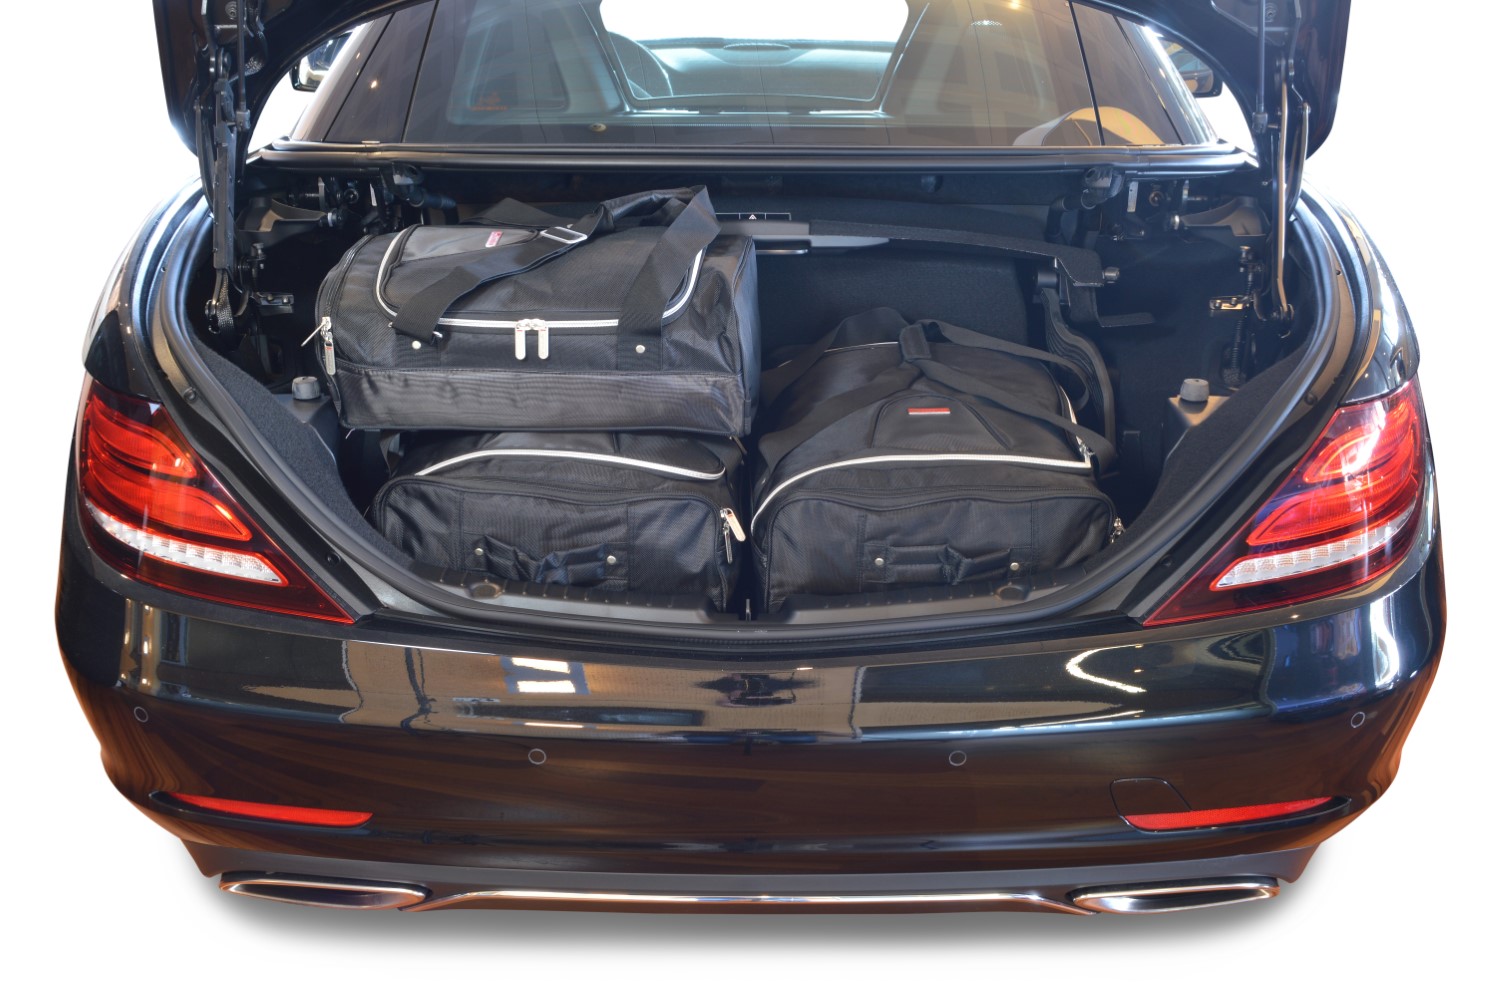 Mercedes-Benz E-Class Car Bag Mercedes-Benz SLK-Class, men model, luggage  Bags, leather, messenger Bag png